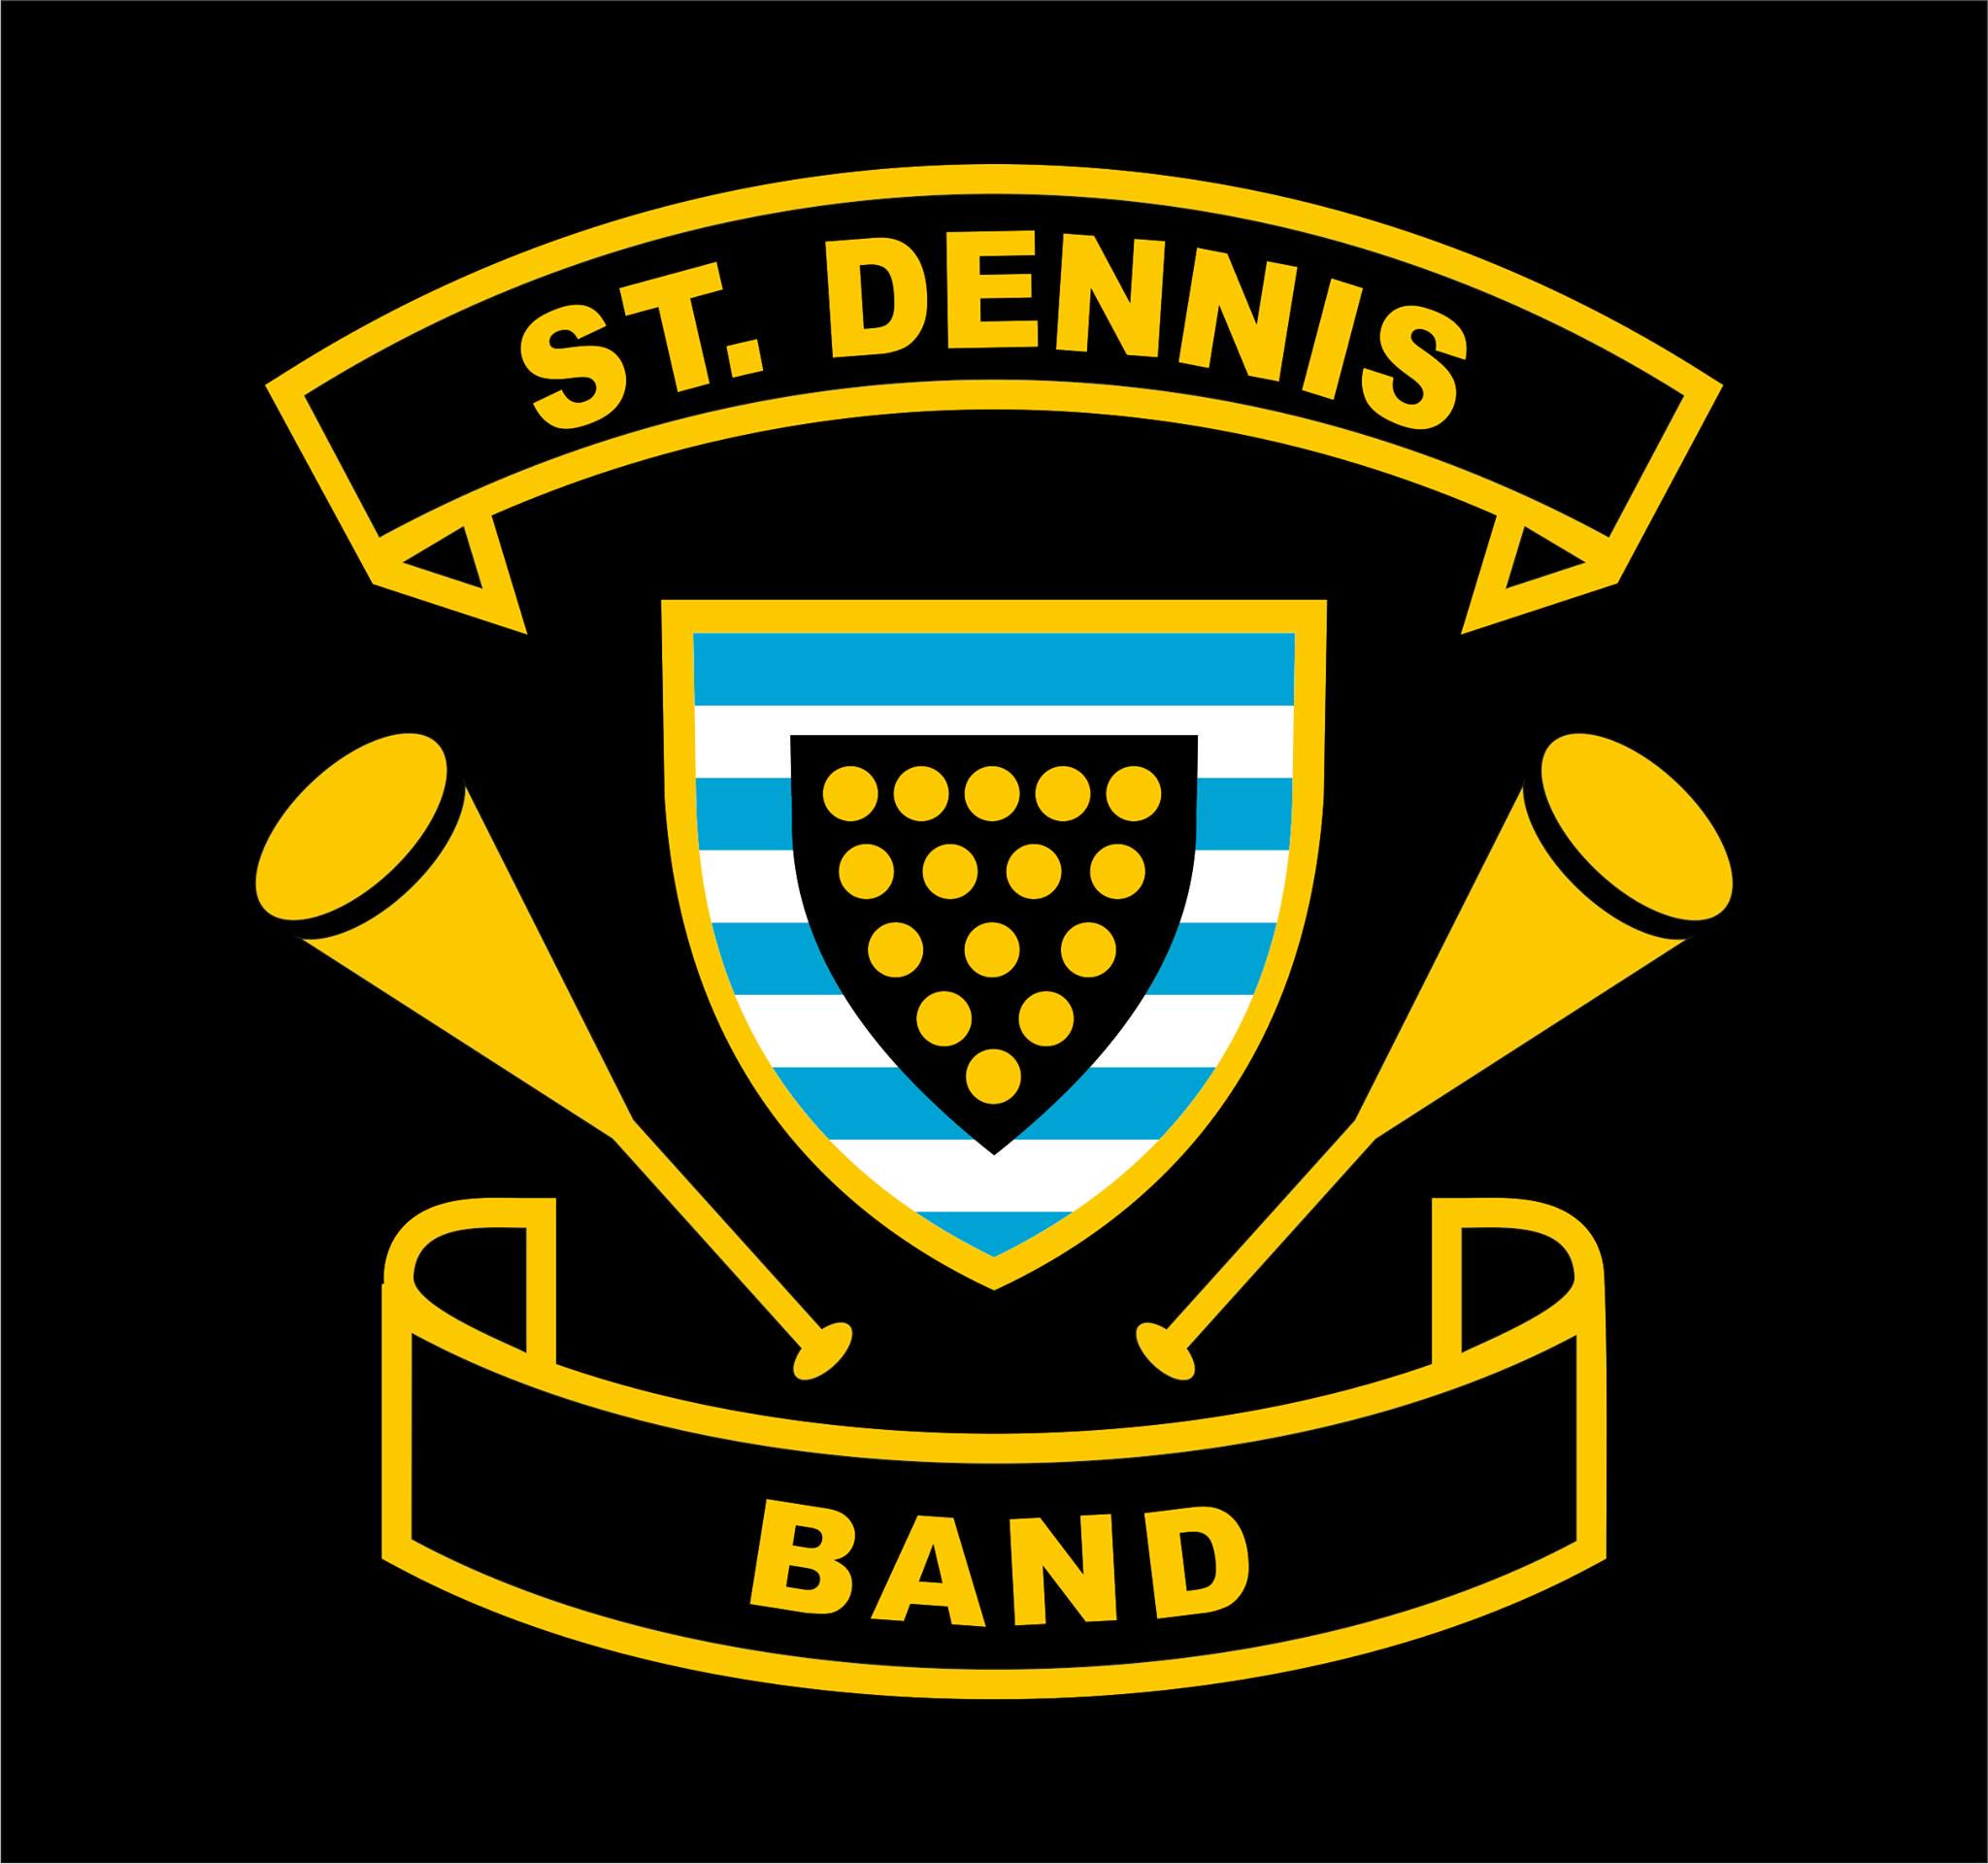 St Dennis Band